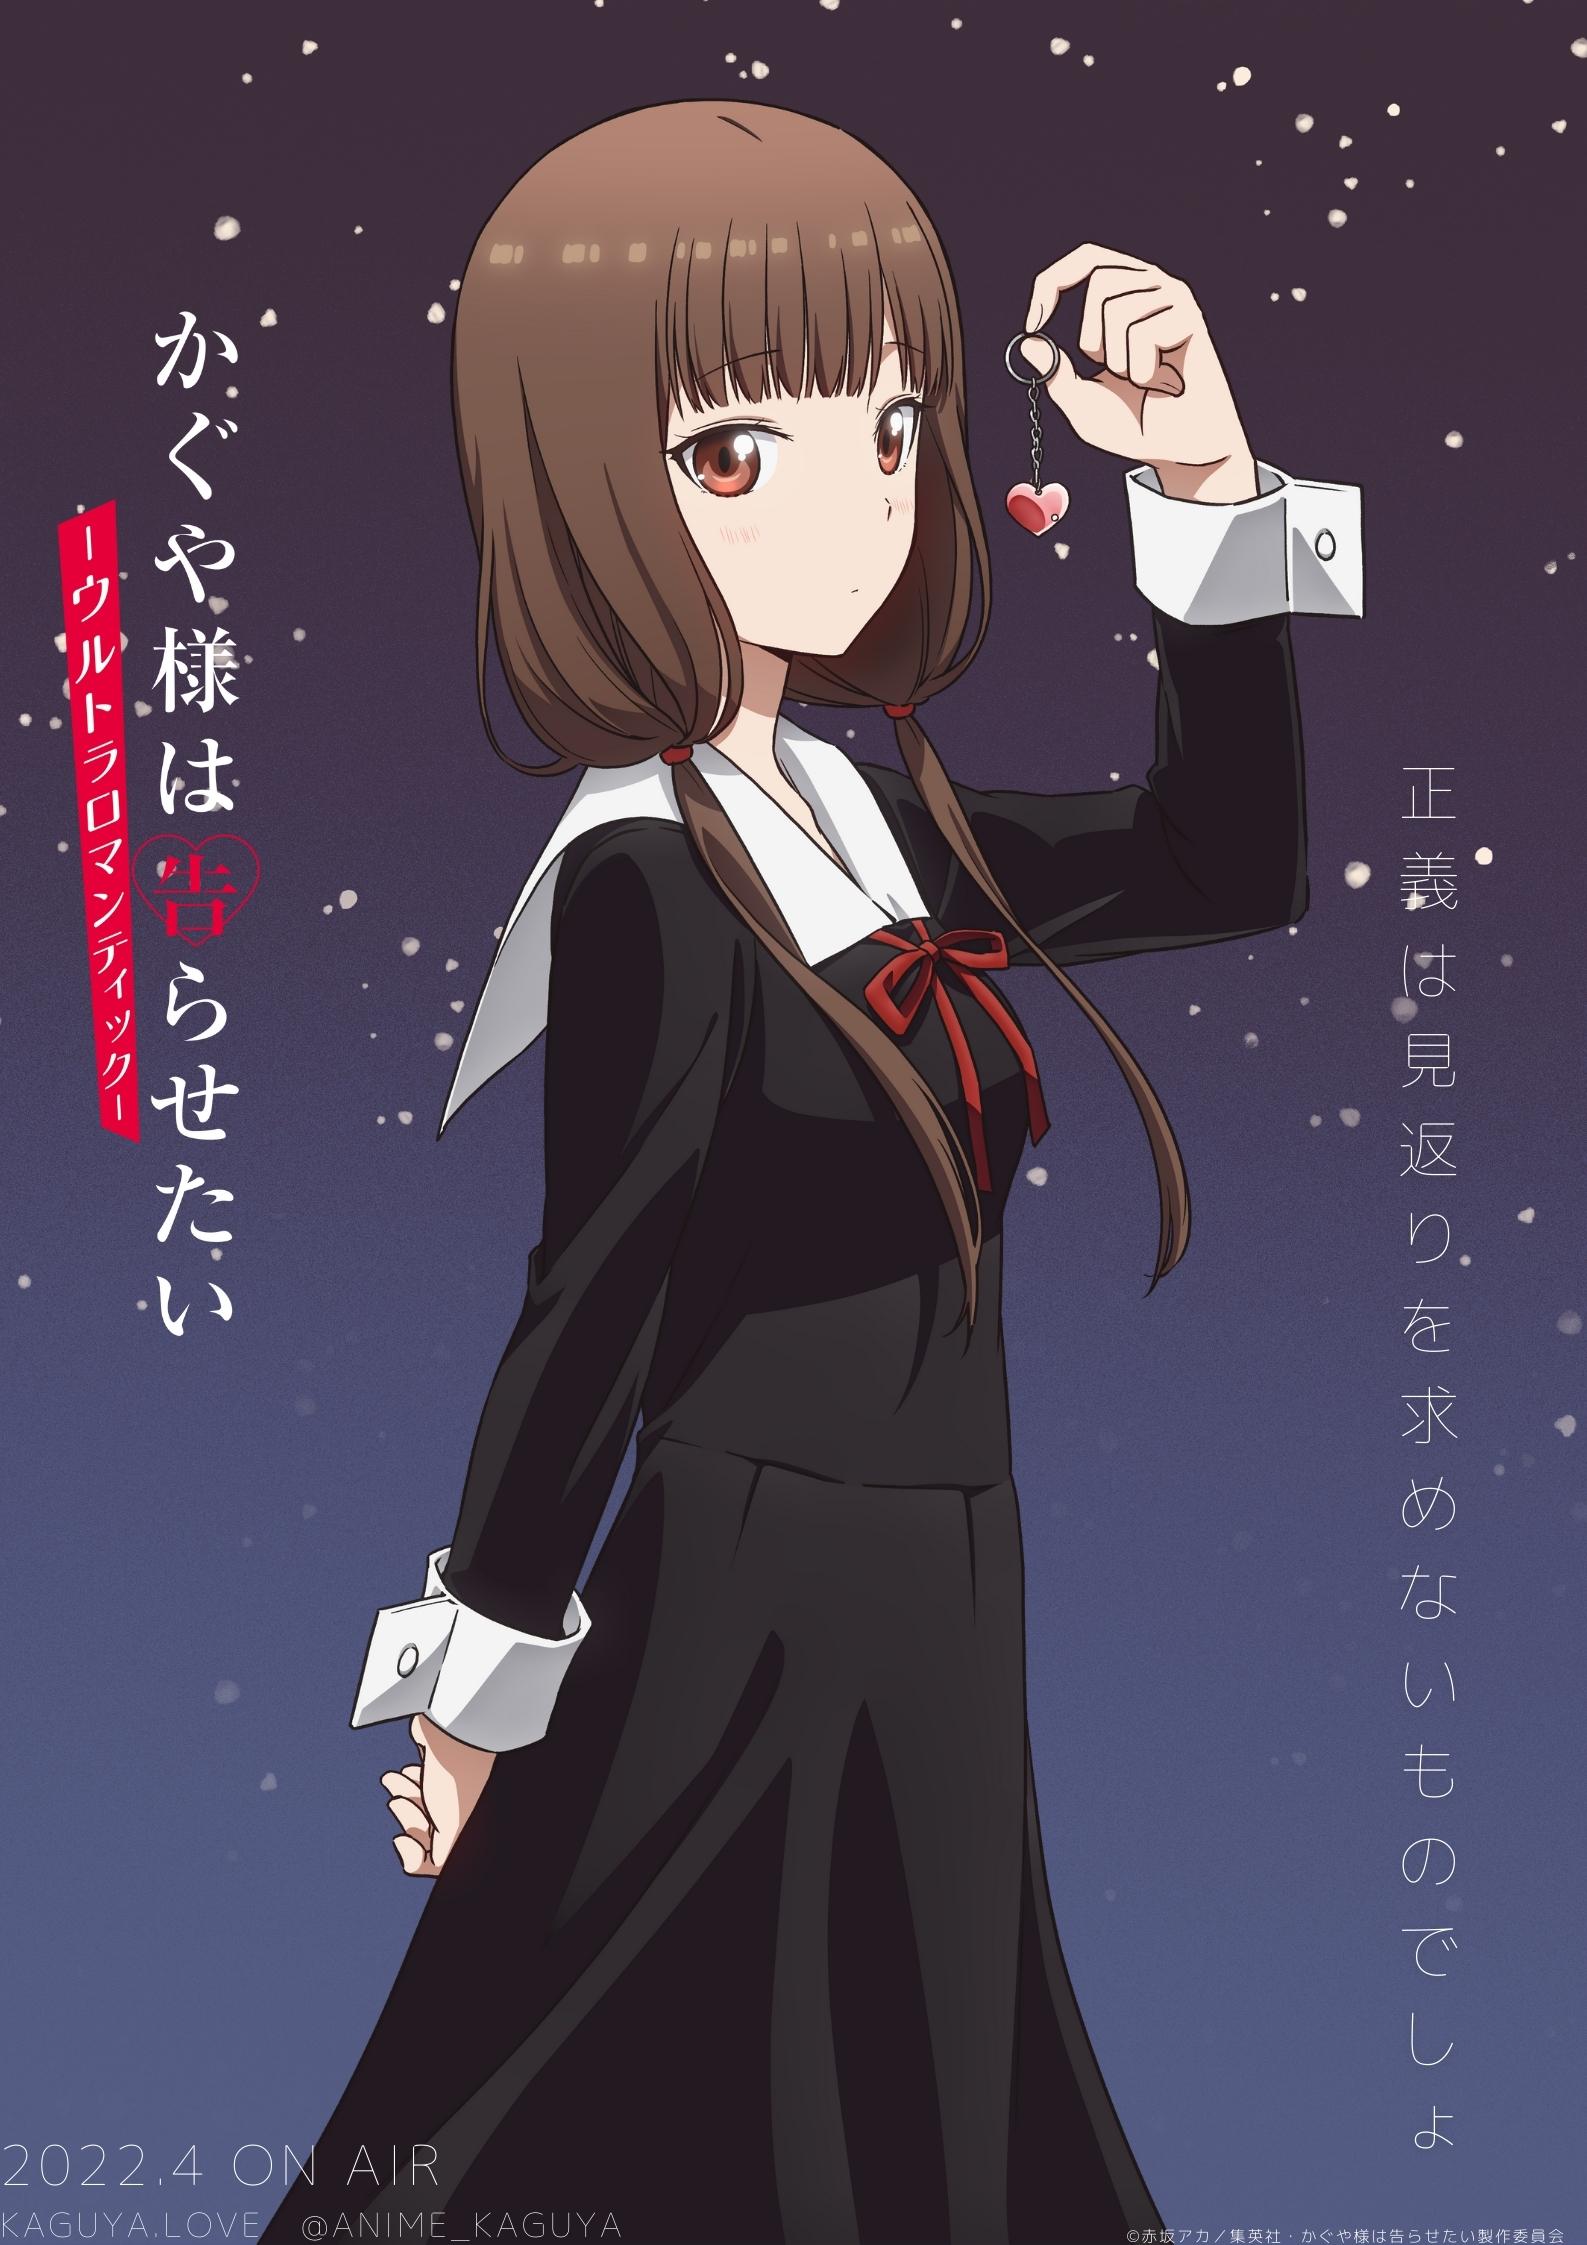 kaguya-sama season 3 iino miko character visual